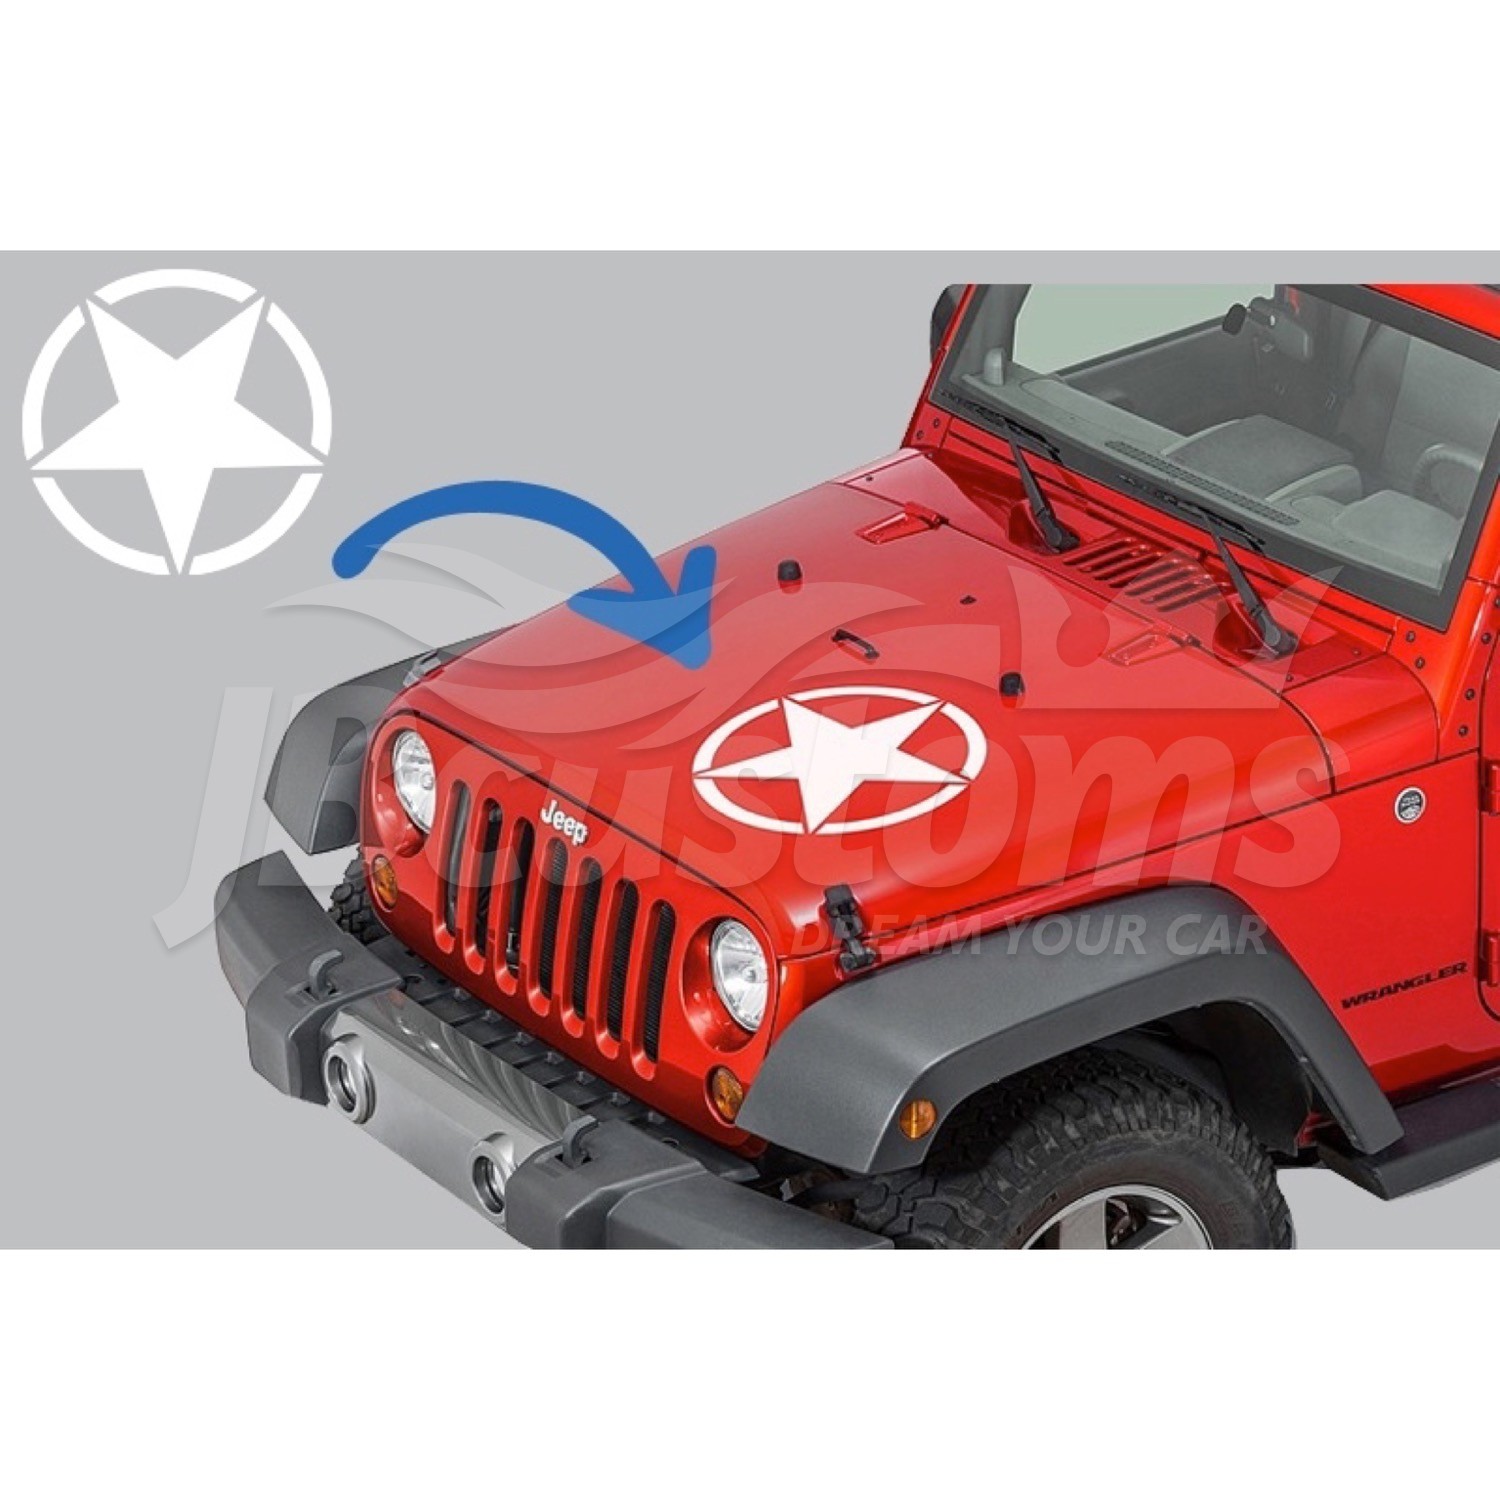 JBCustoms - White Star Jeep Wrangler Sticker